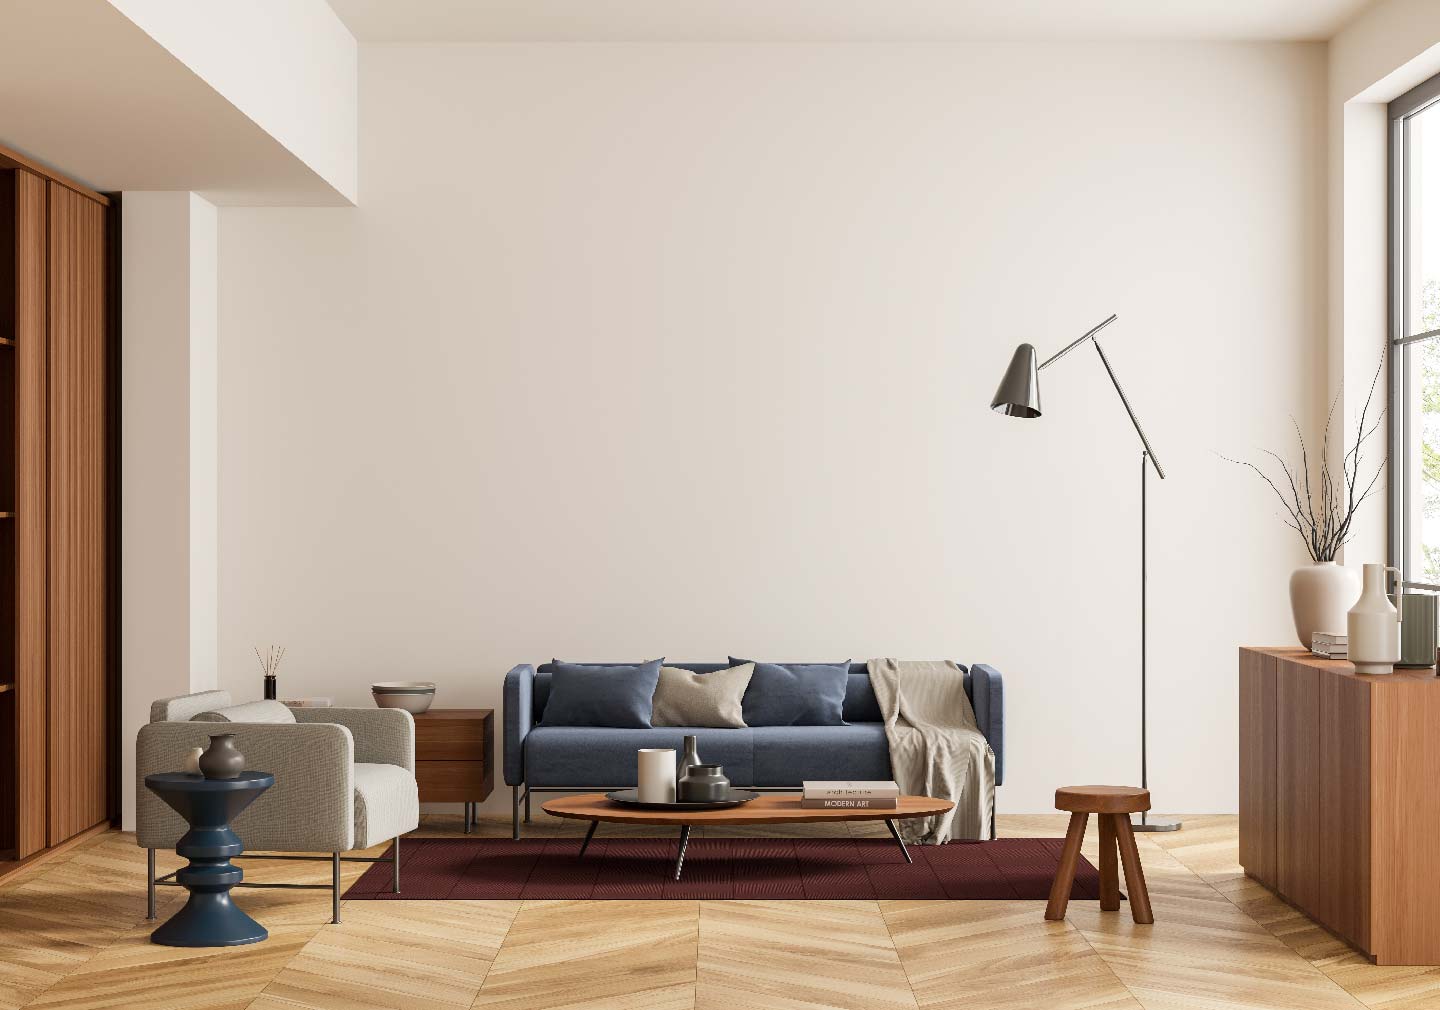  minimalist living room interior design ideas